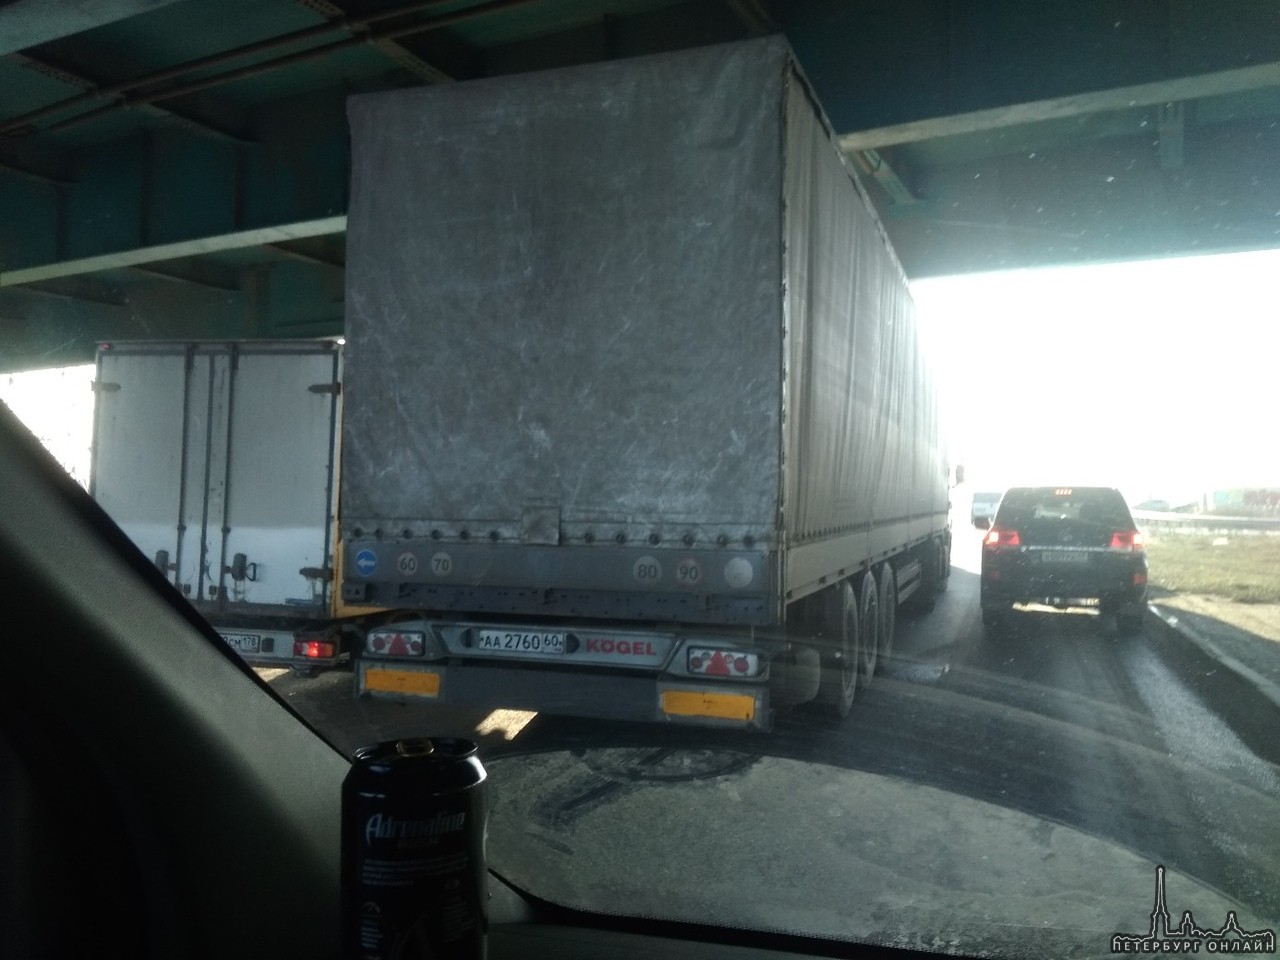 Из-за аварии между фурой и каршерингом под Волхонским путепроводом на Пулковском шоссе, образовалась...